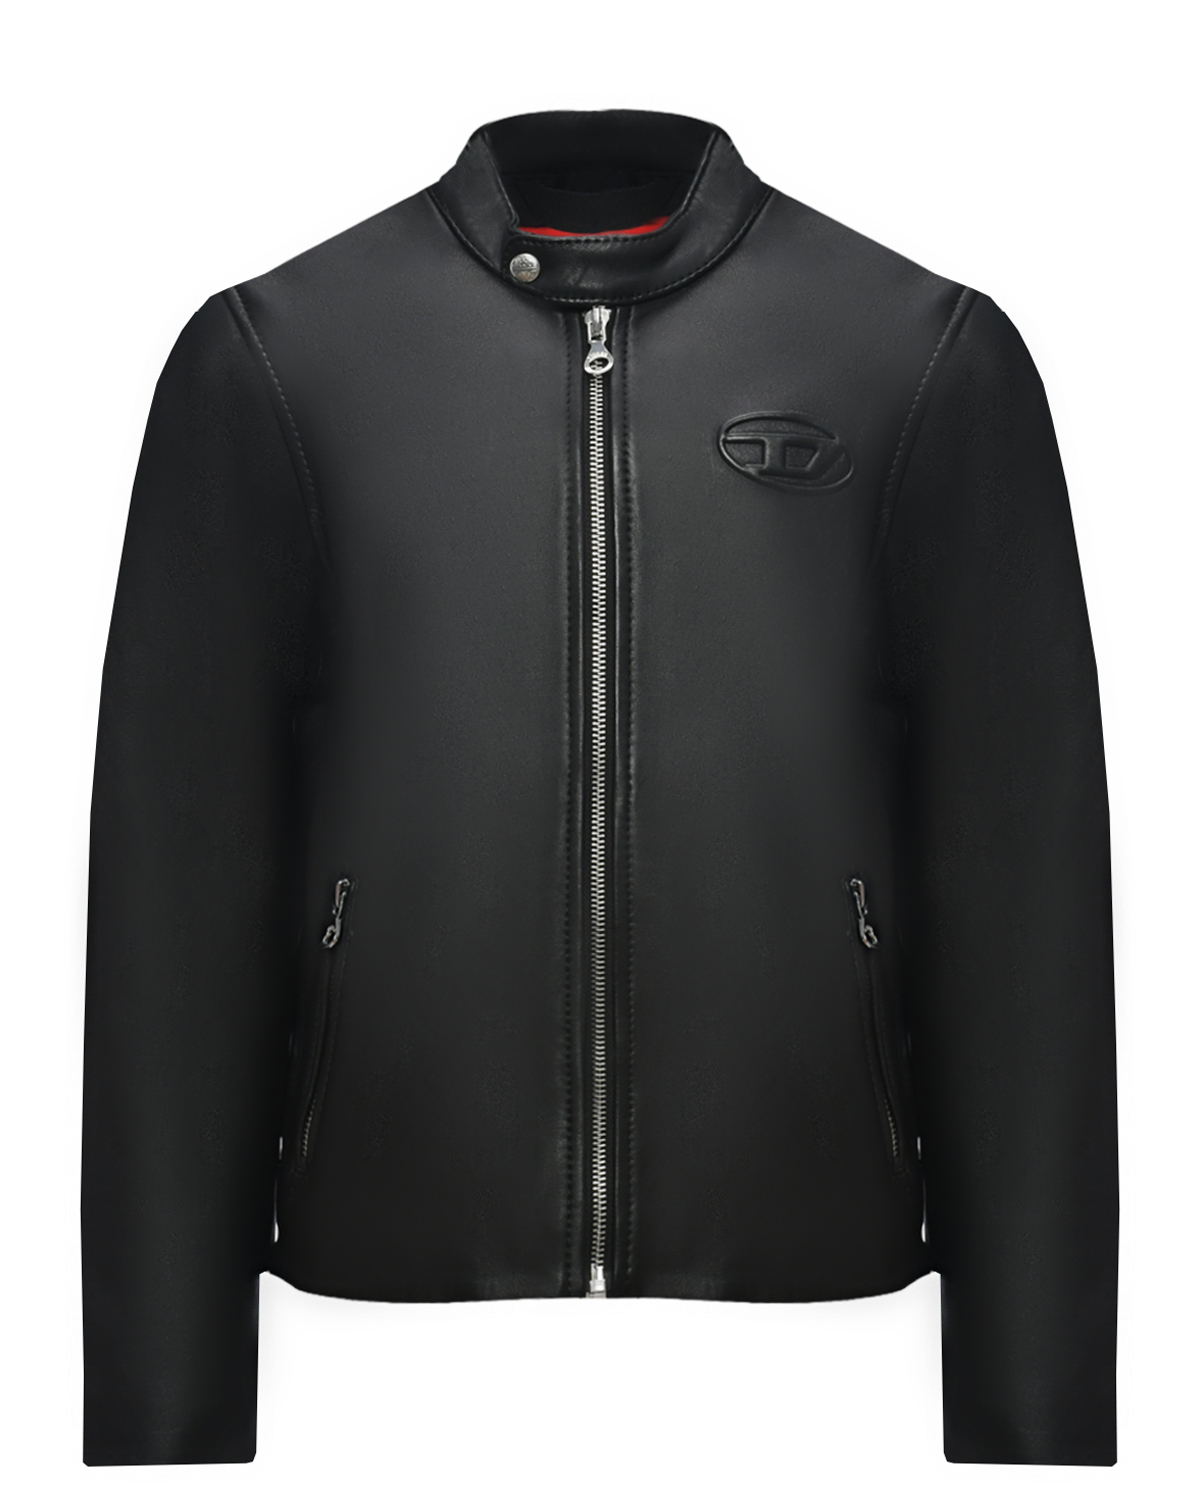 Кожаная куртка, черная Diesel, размер 152, цвет черный - фото 1